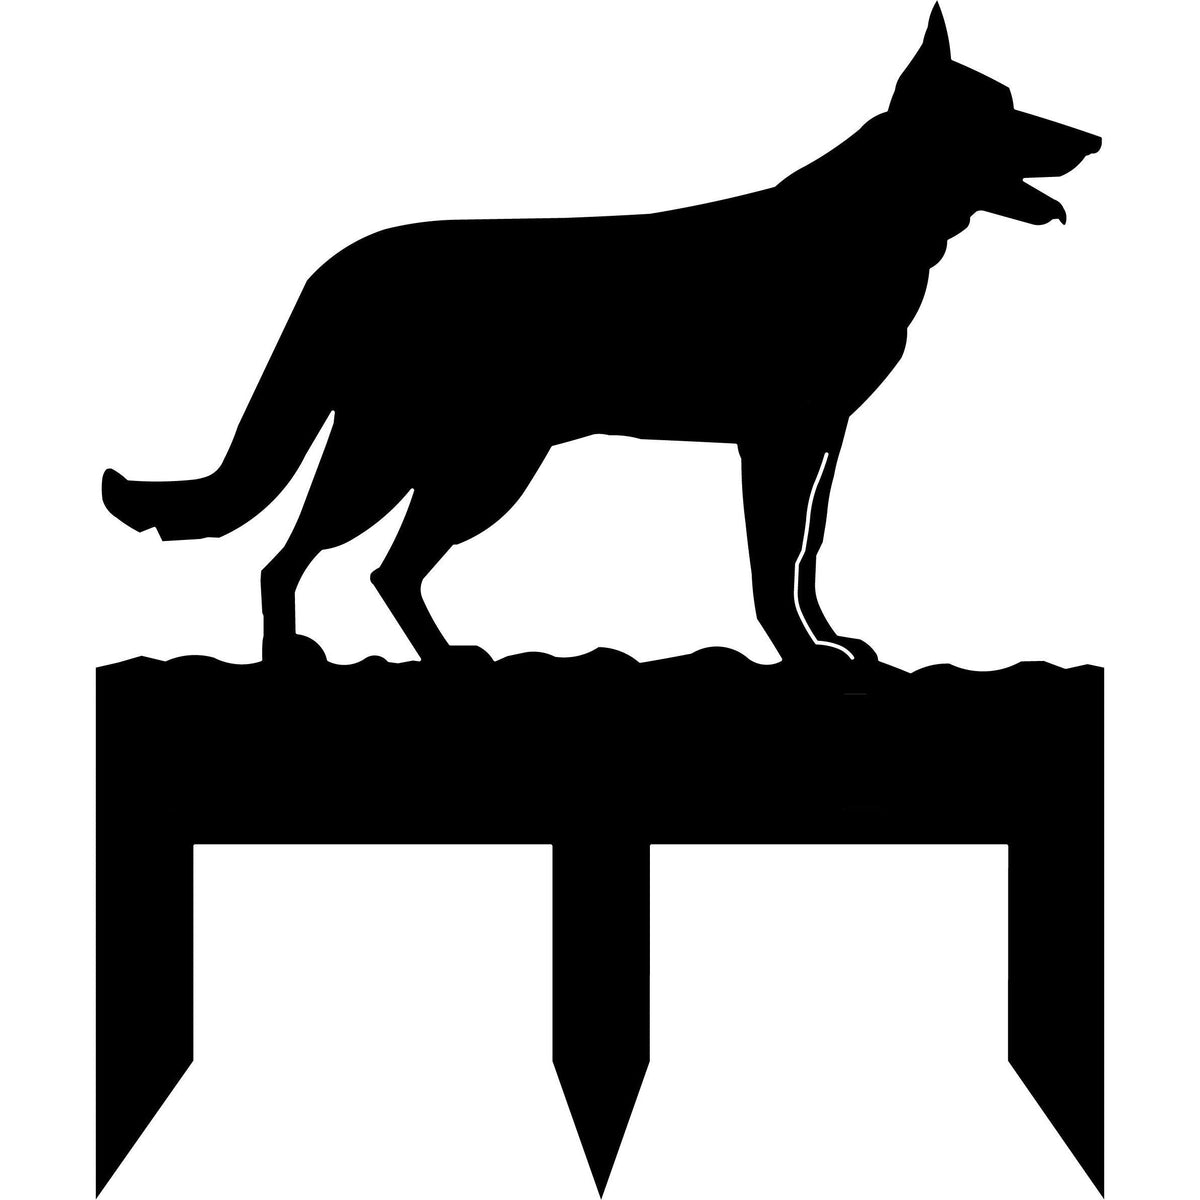 German Shepherd dog address stake